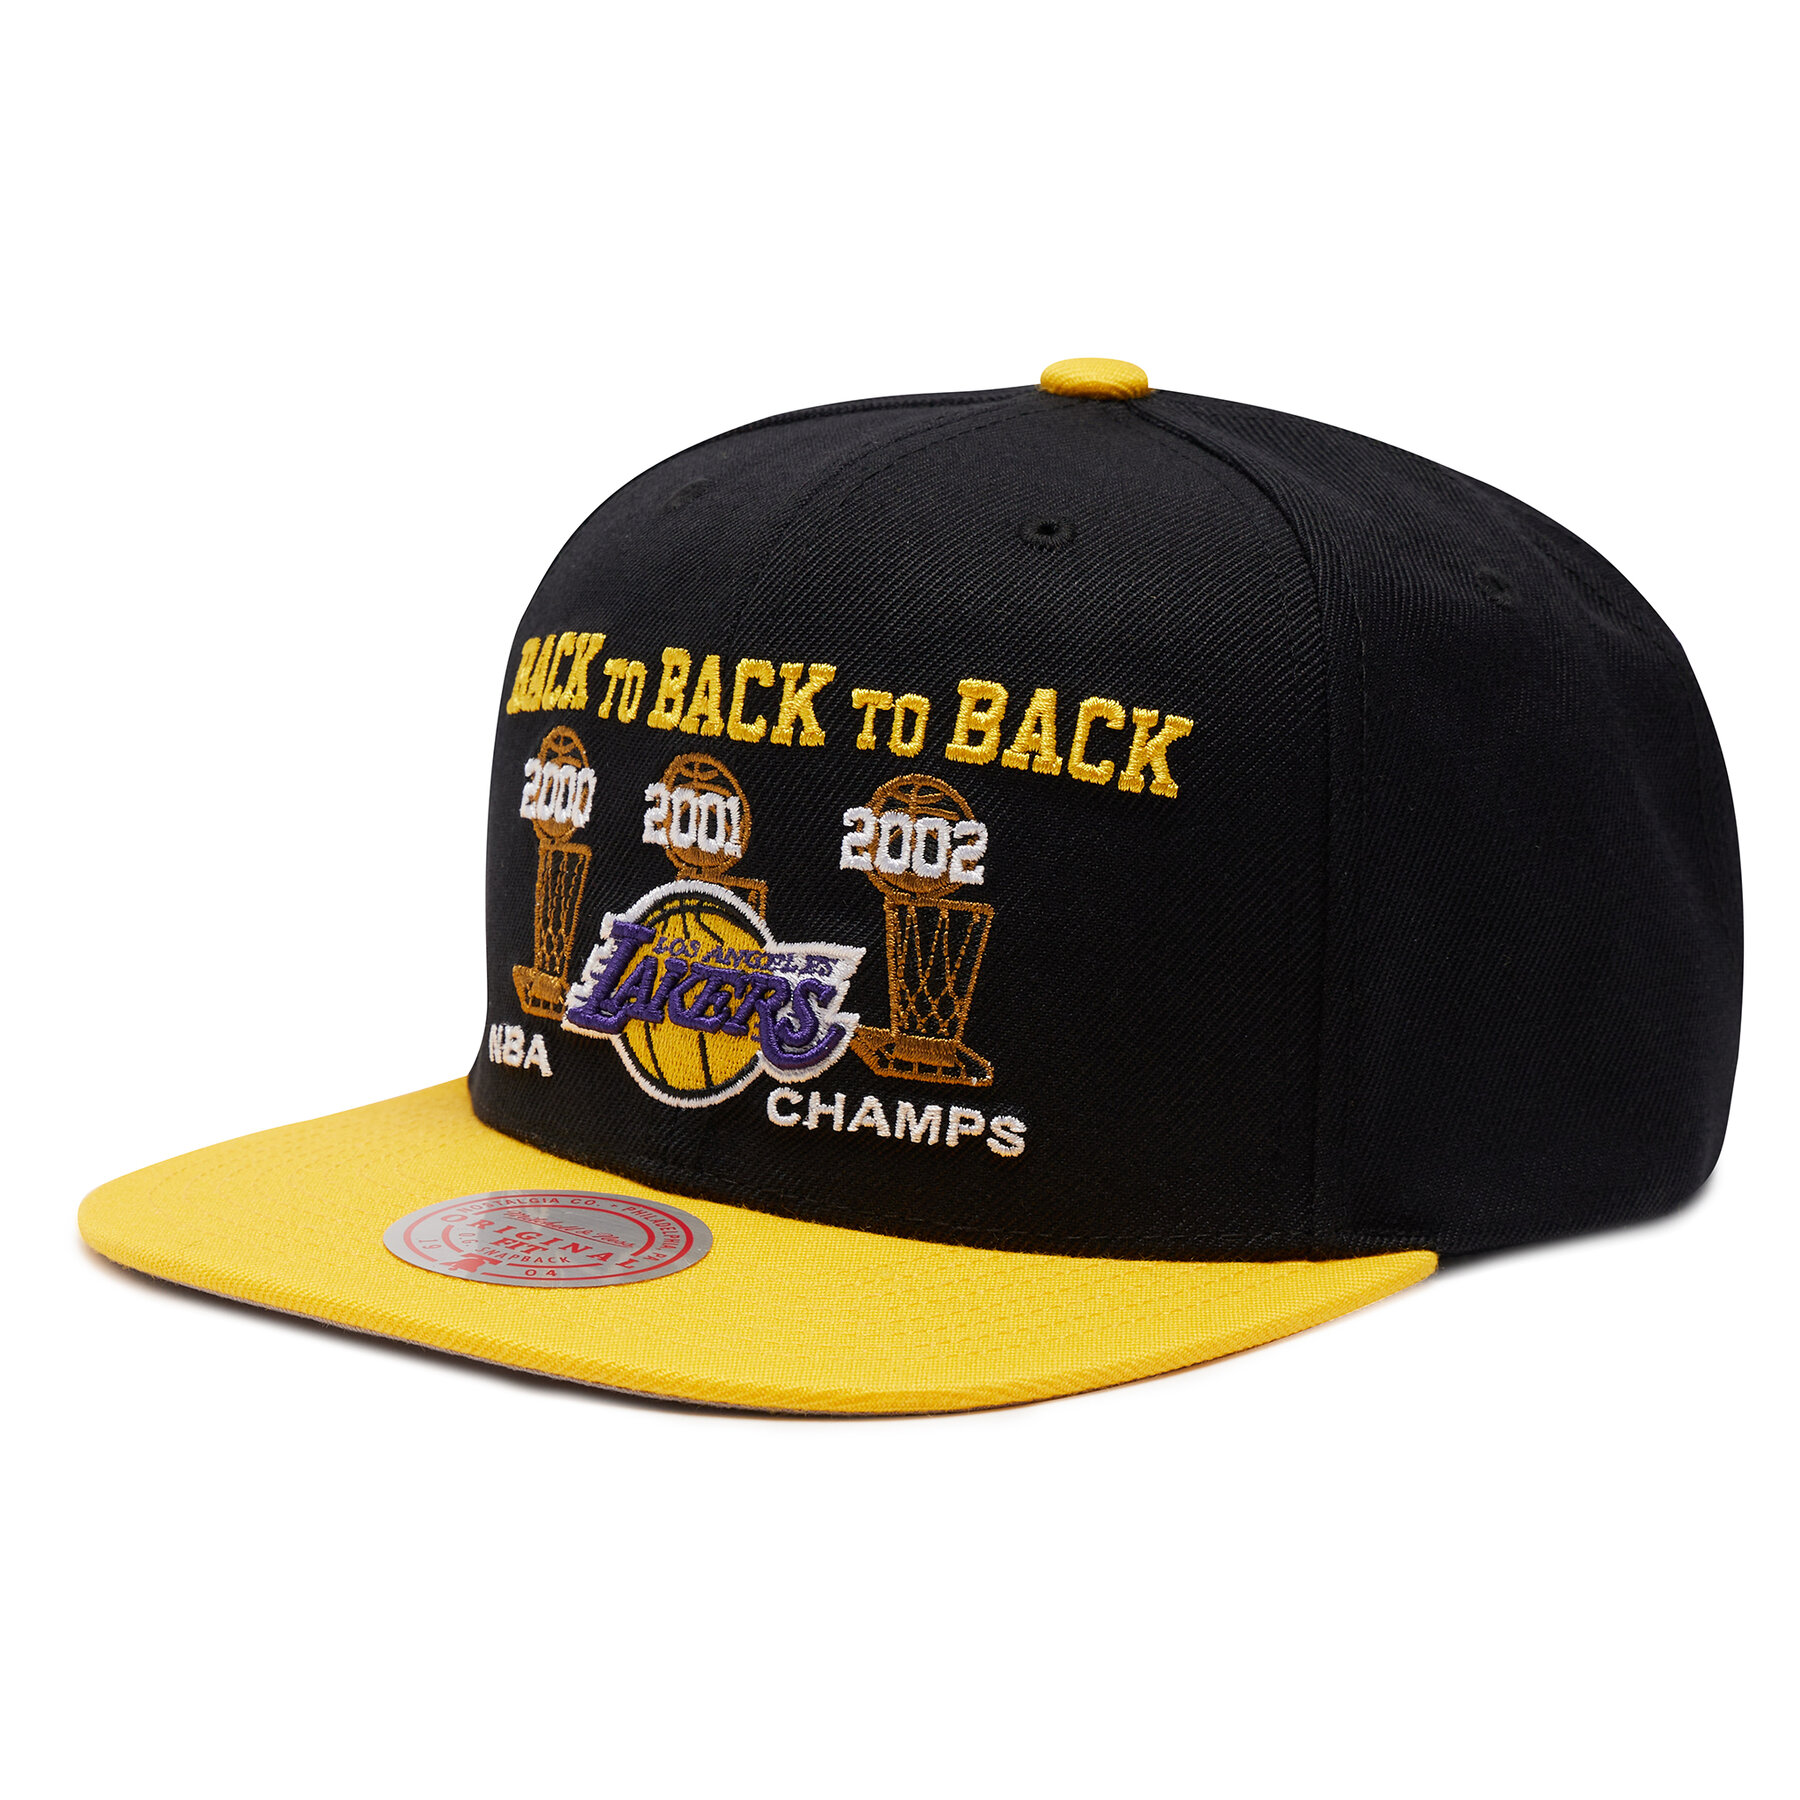 Cap Mitchell & Ness NBA Lakers Champs HHSS4196 Black/Gold von Mitchell & Ness